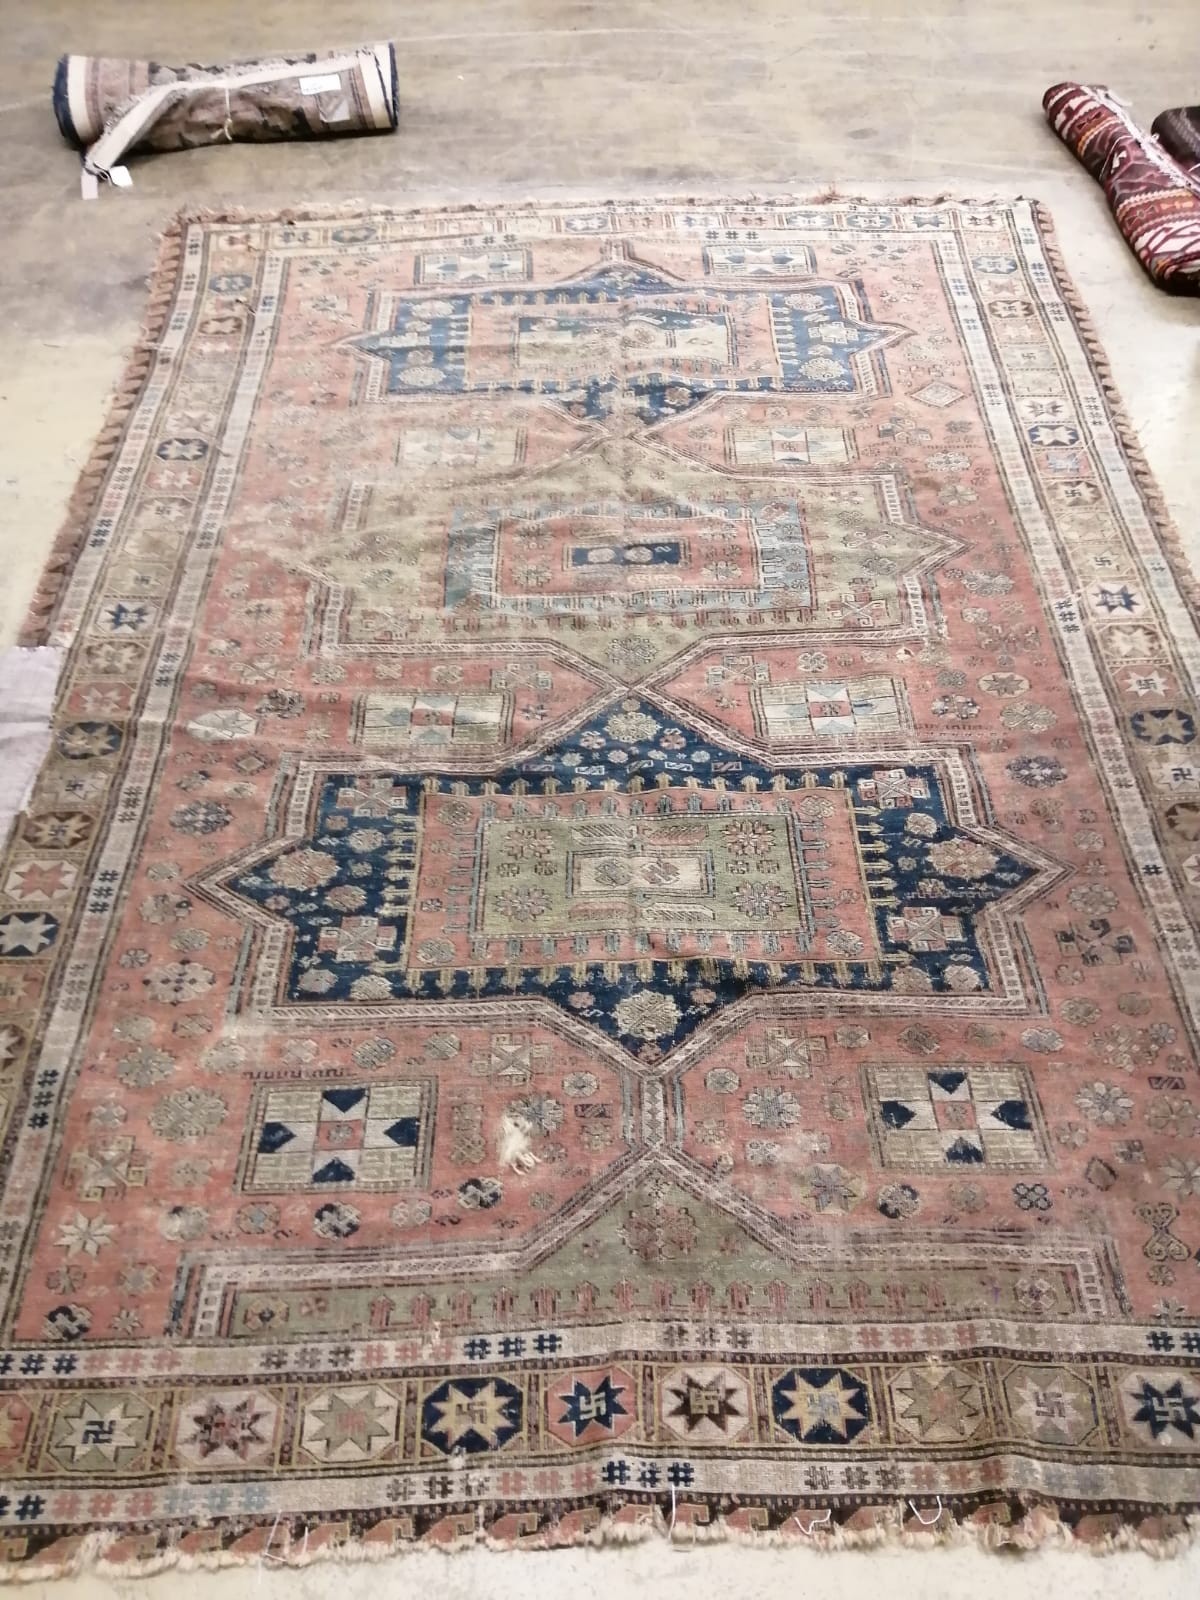 An antique Soumac carpet, approx. 240 x 200cm